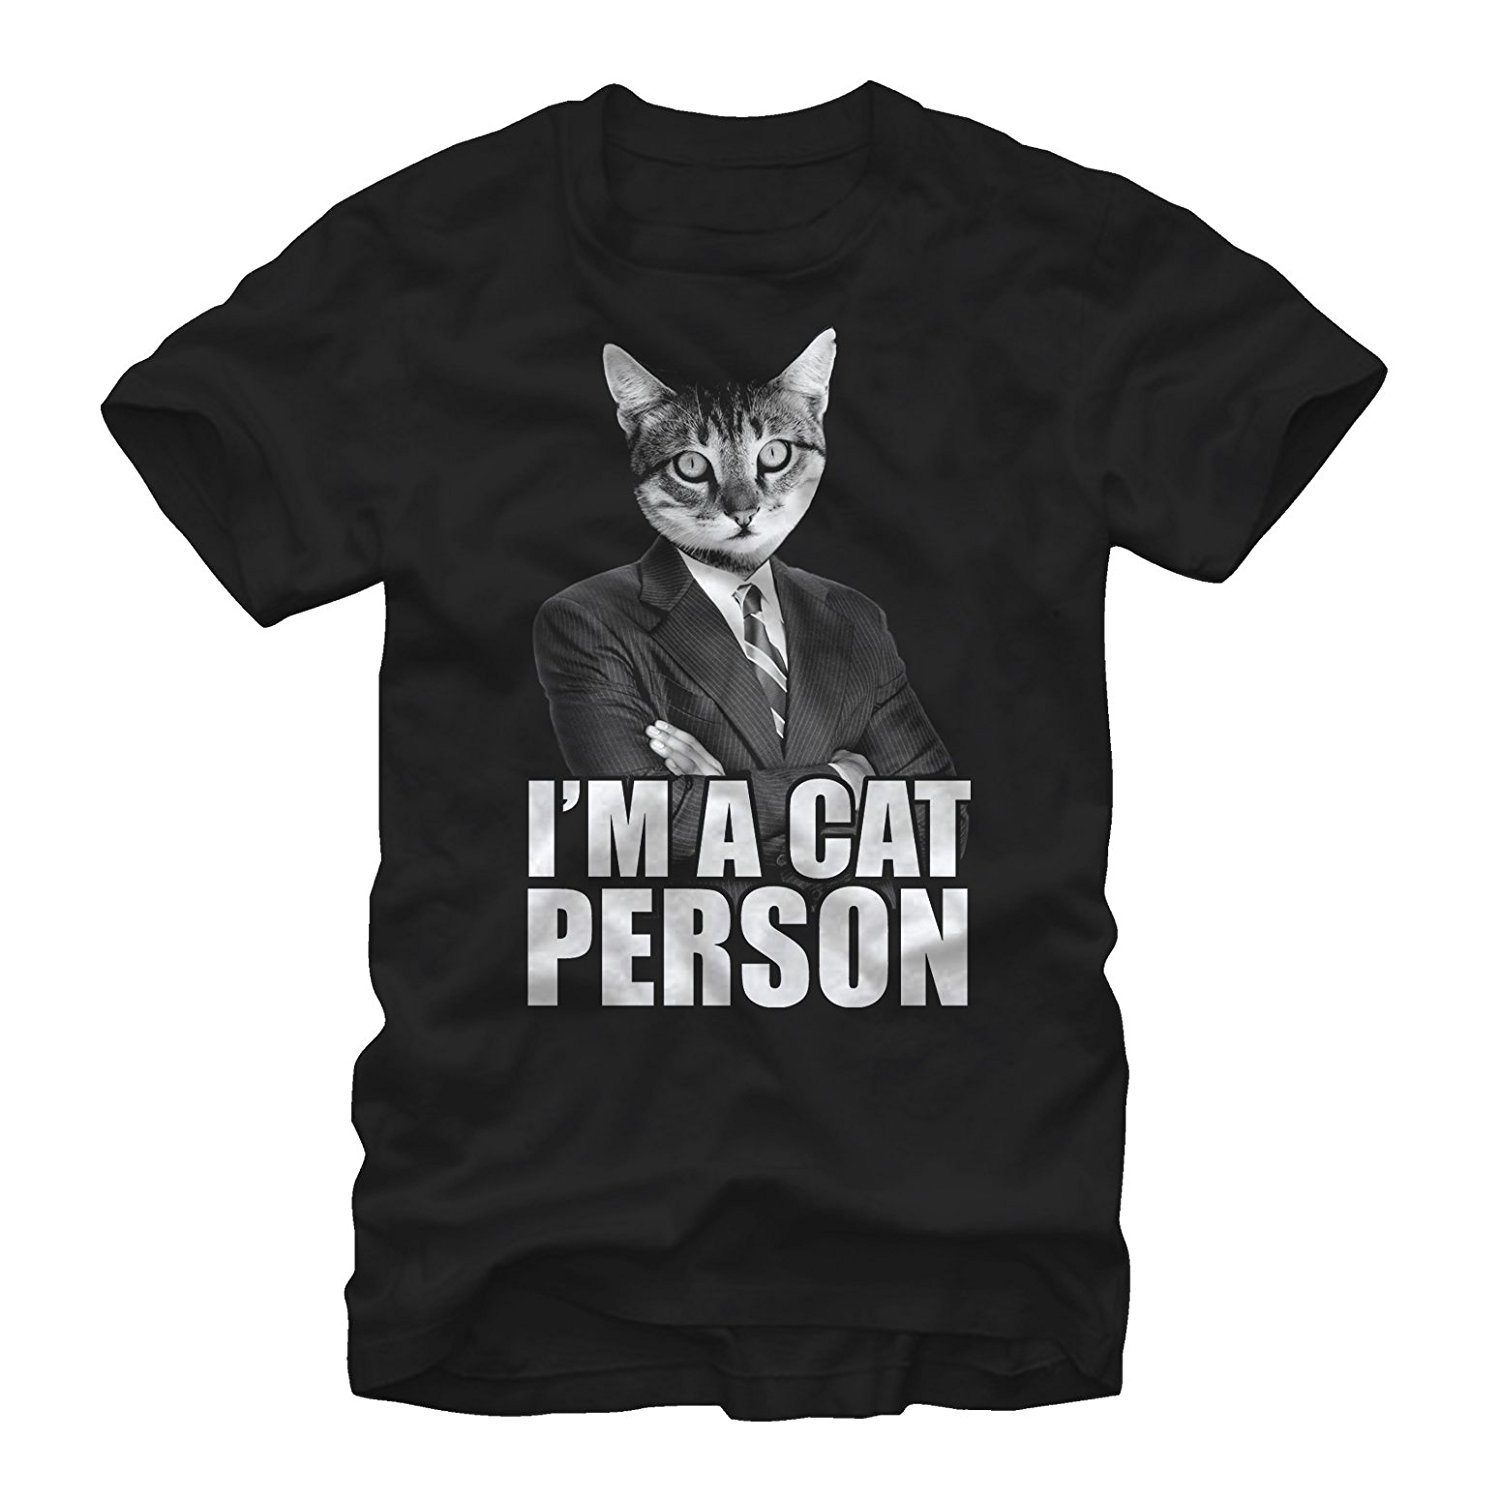 Cat Person Men's T-Shirt